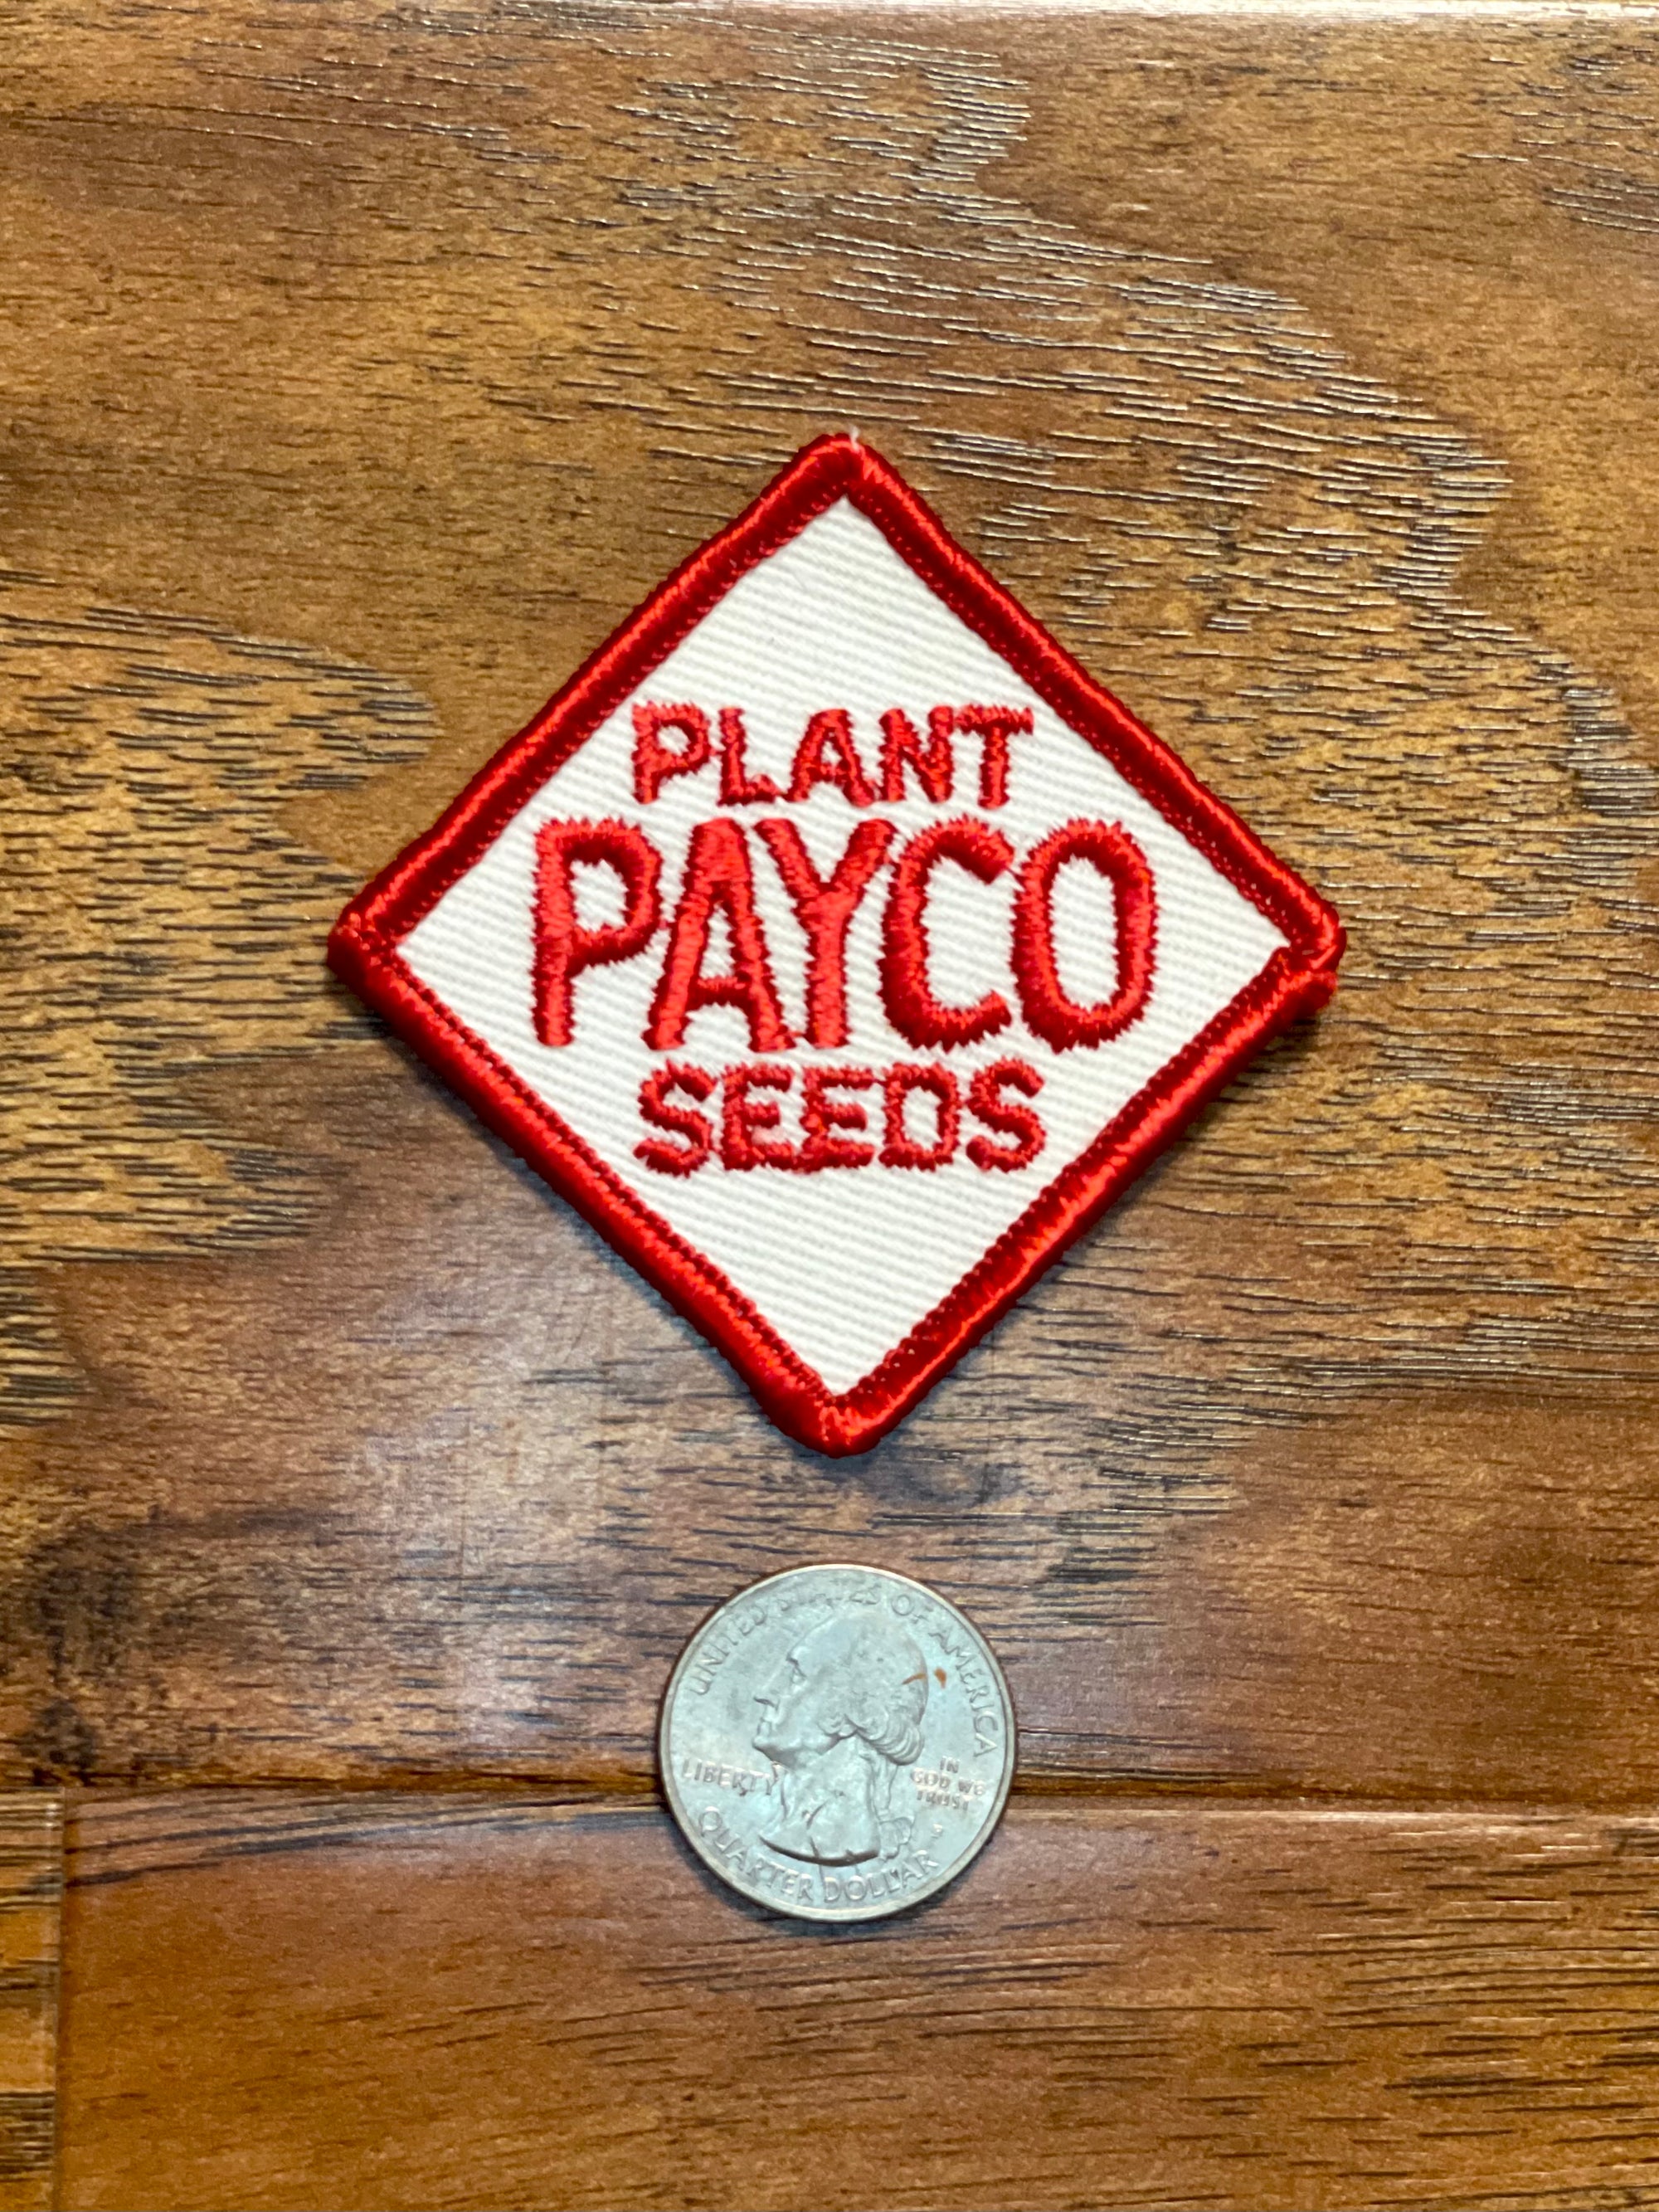 Vintage Plant Payco Seeds